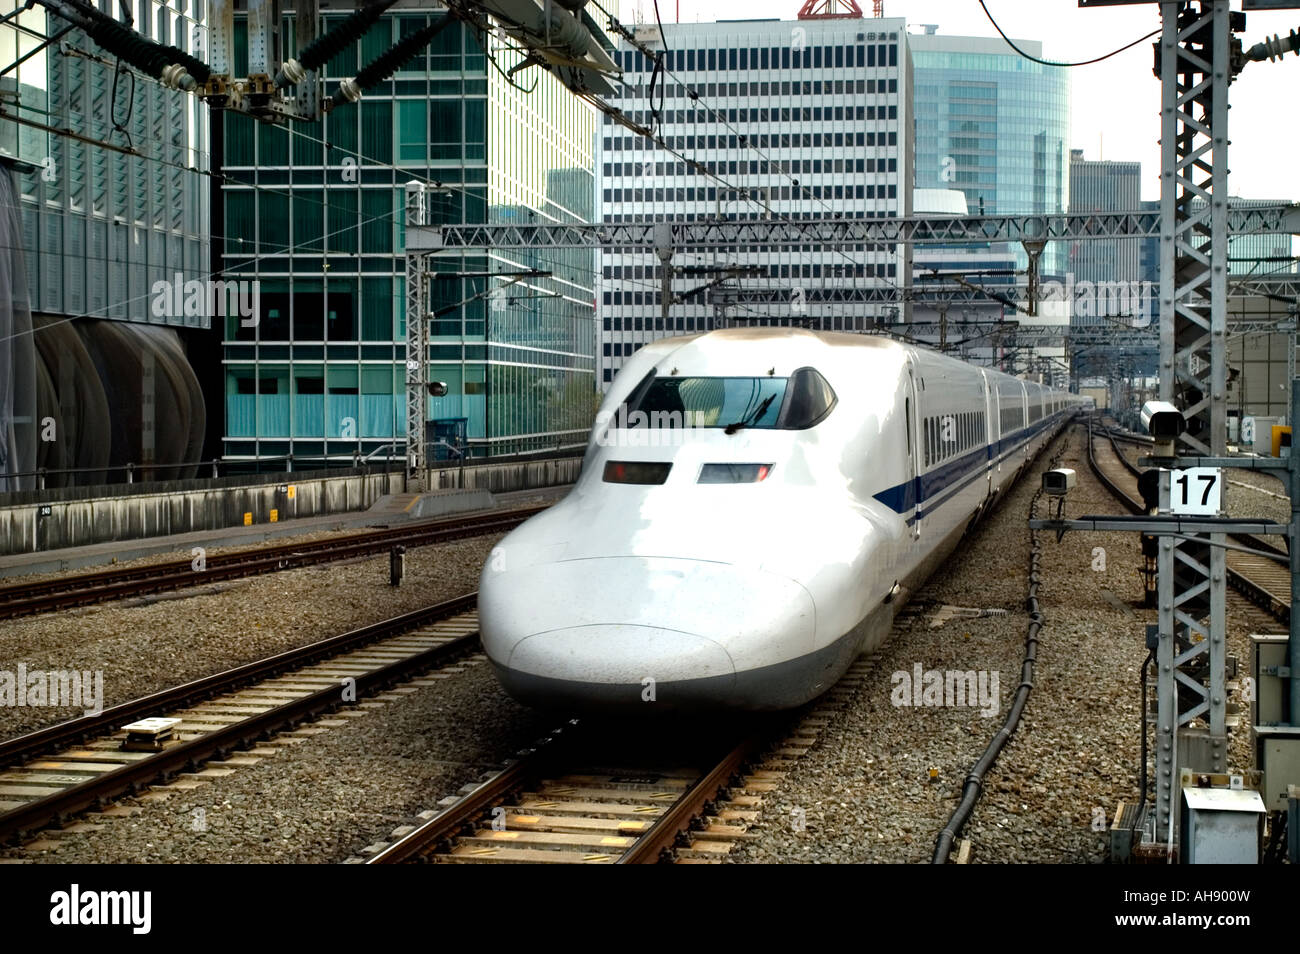 Japan Japanese Tokyo train railway transport  bullet train  fast efficient japanese service Stock Photo